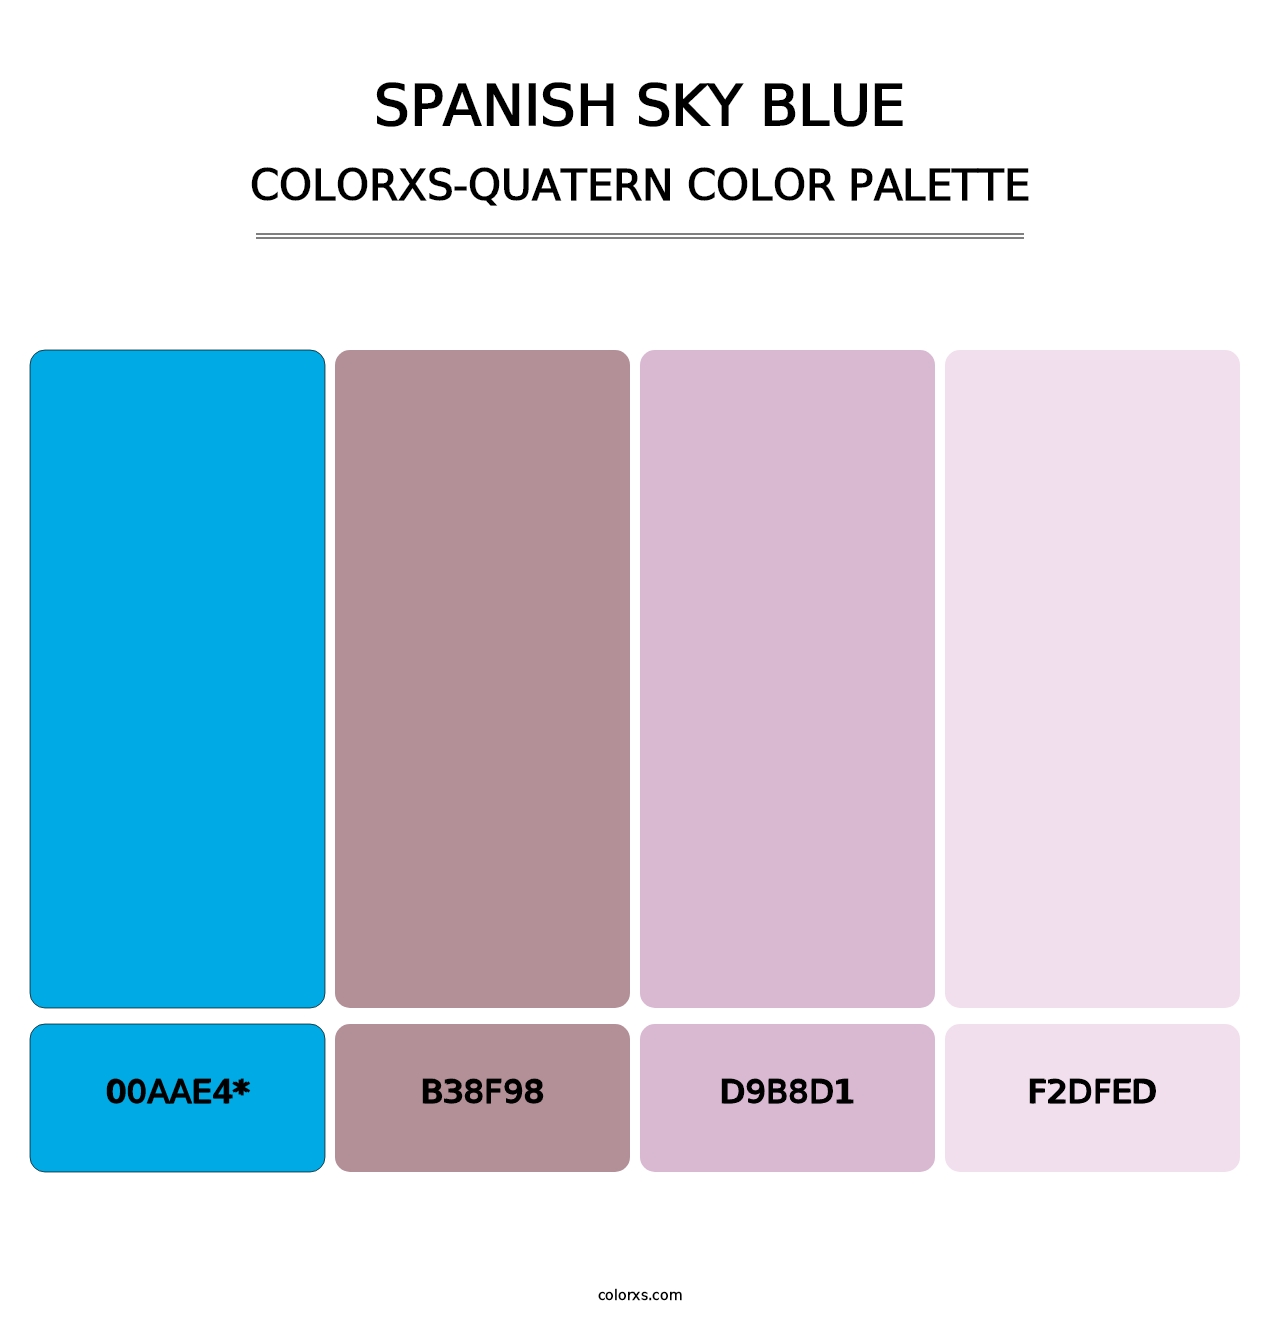 Spanish Sky Blue - Colorxs Quatern Palette